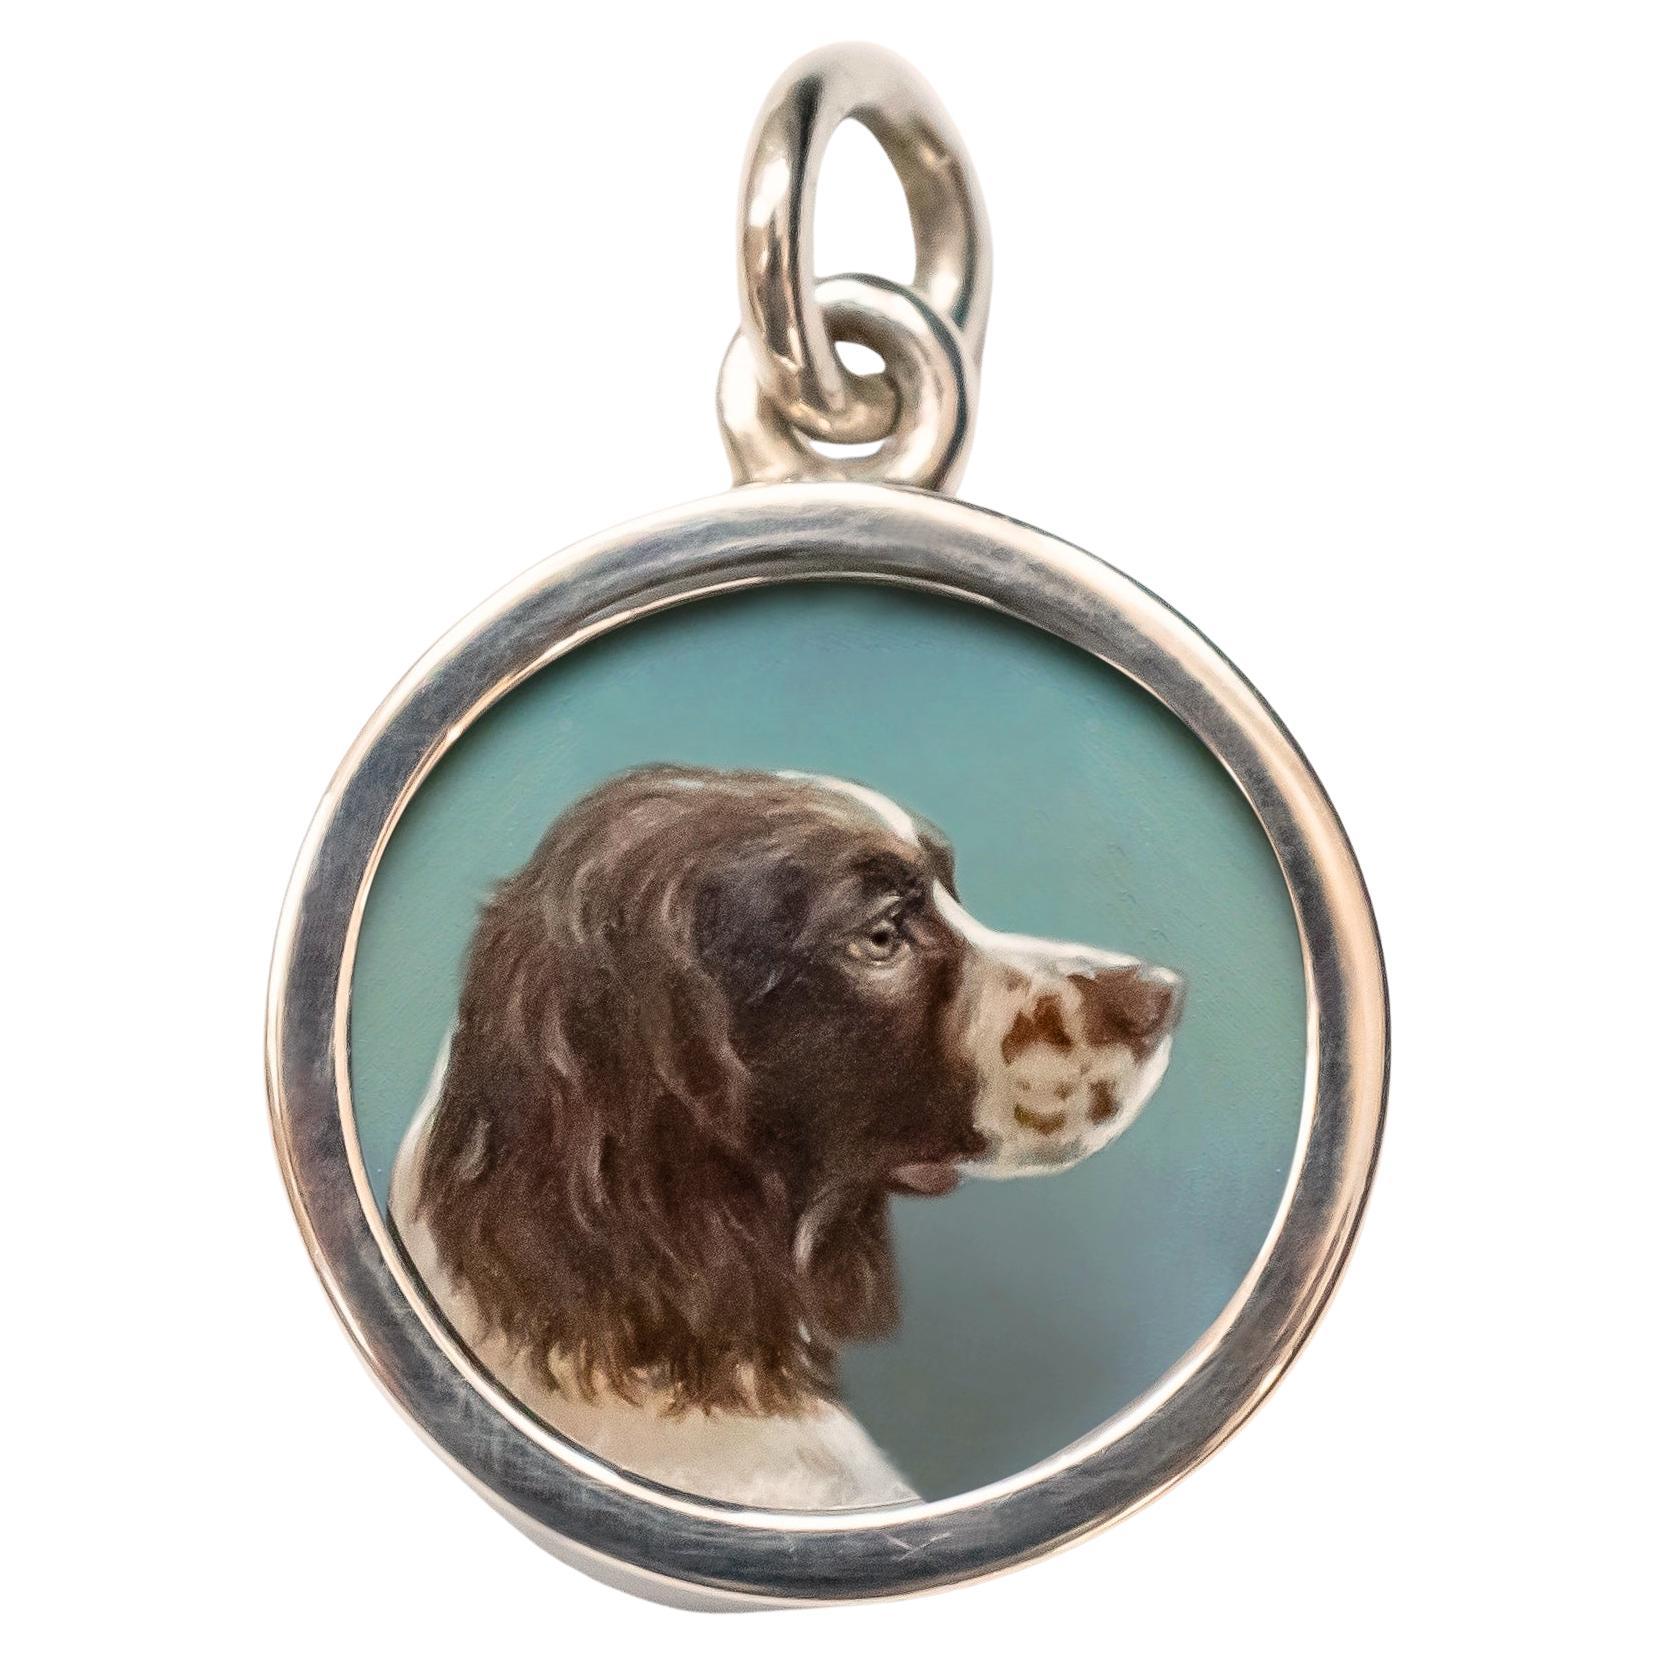 Beth De Loiselle Miniature Spaniel Dog Oil in Paul Eaton Bespoke Charm/Pendant For Sale